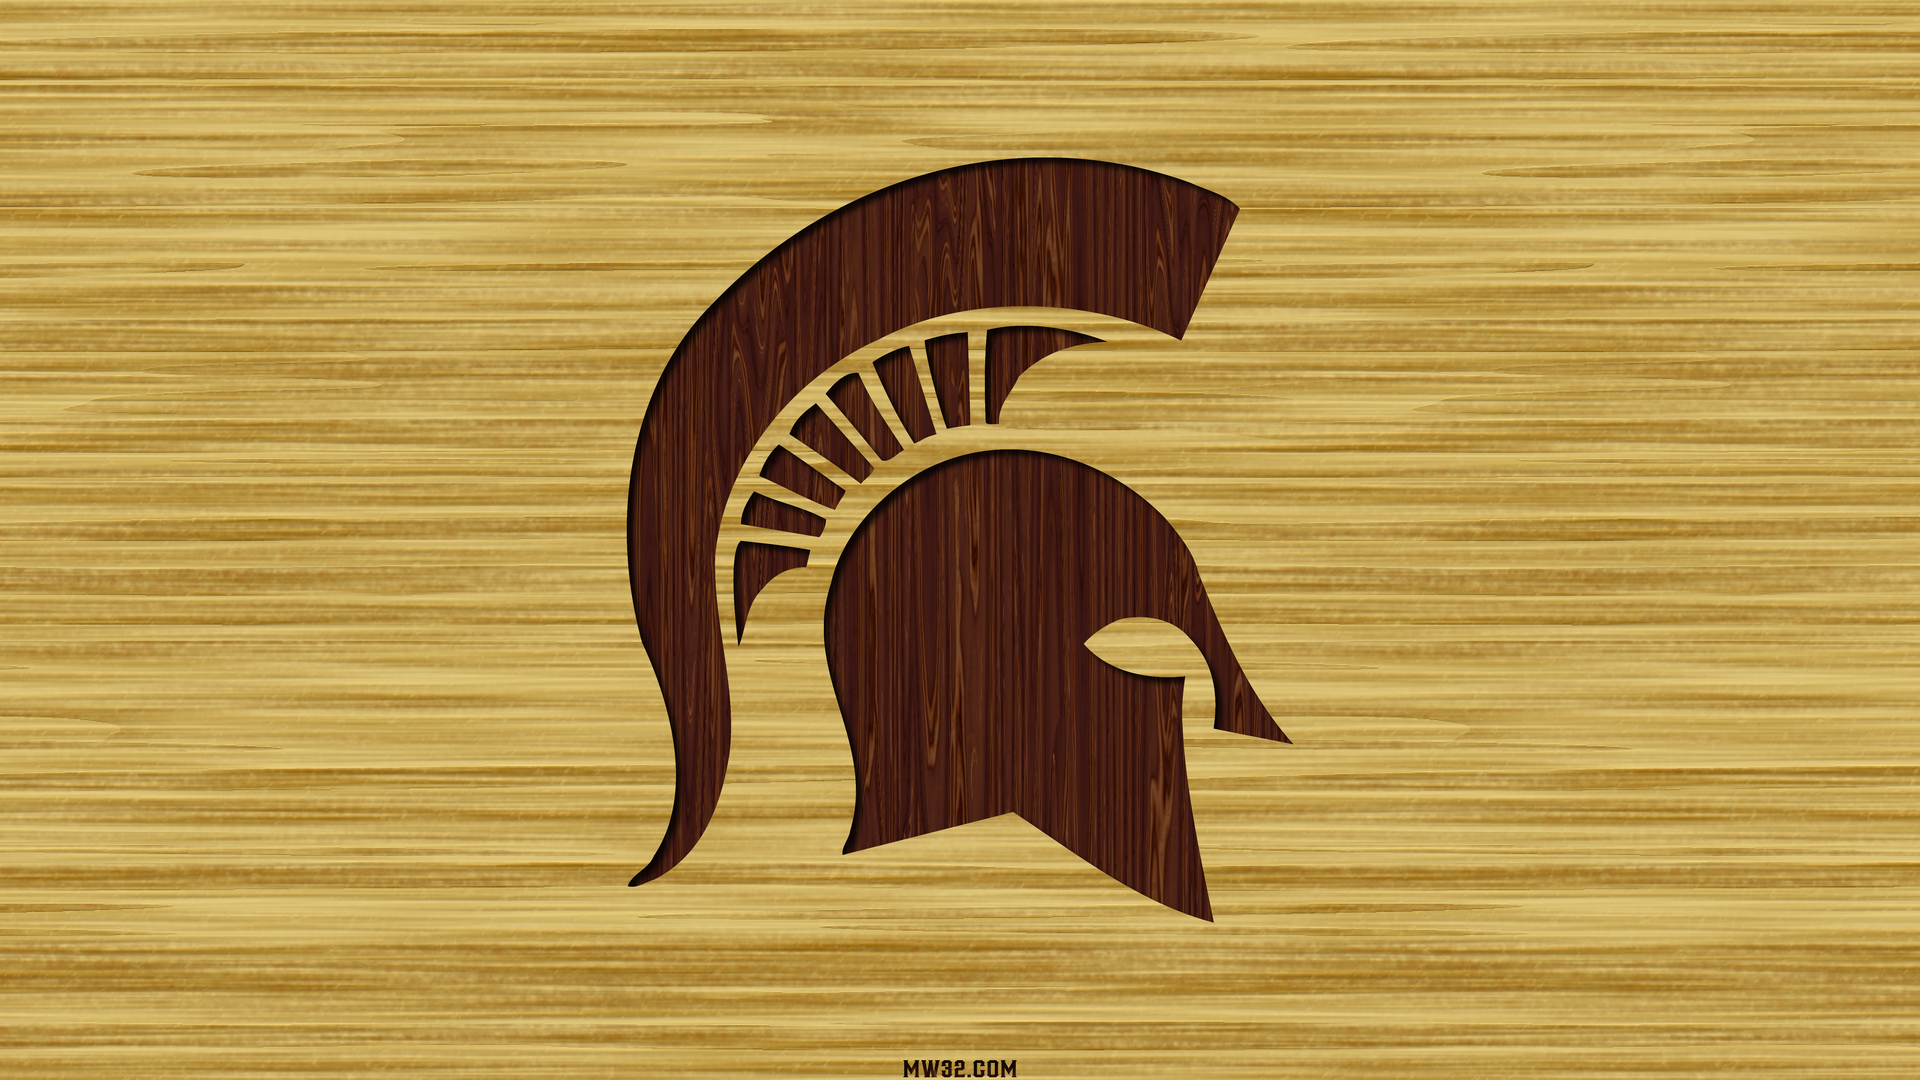 Michigan State Basketball Court Wallpaper Image